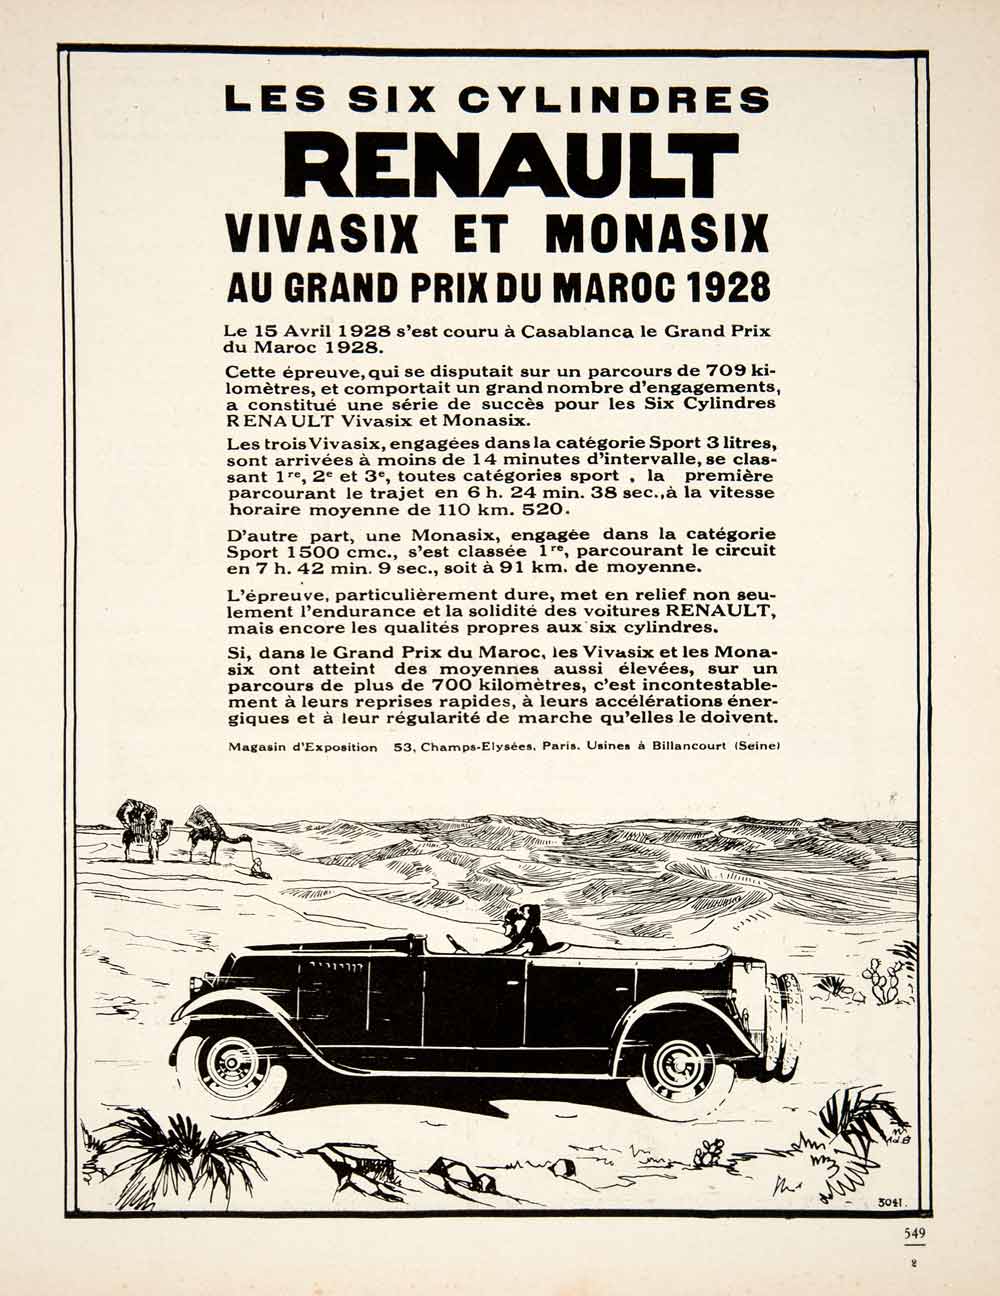 1928 Ad French Renault Automobile Monasix Vivasix Vintage Car 6 Cylinder VEN5